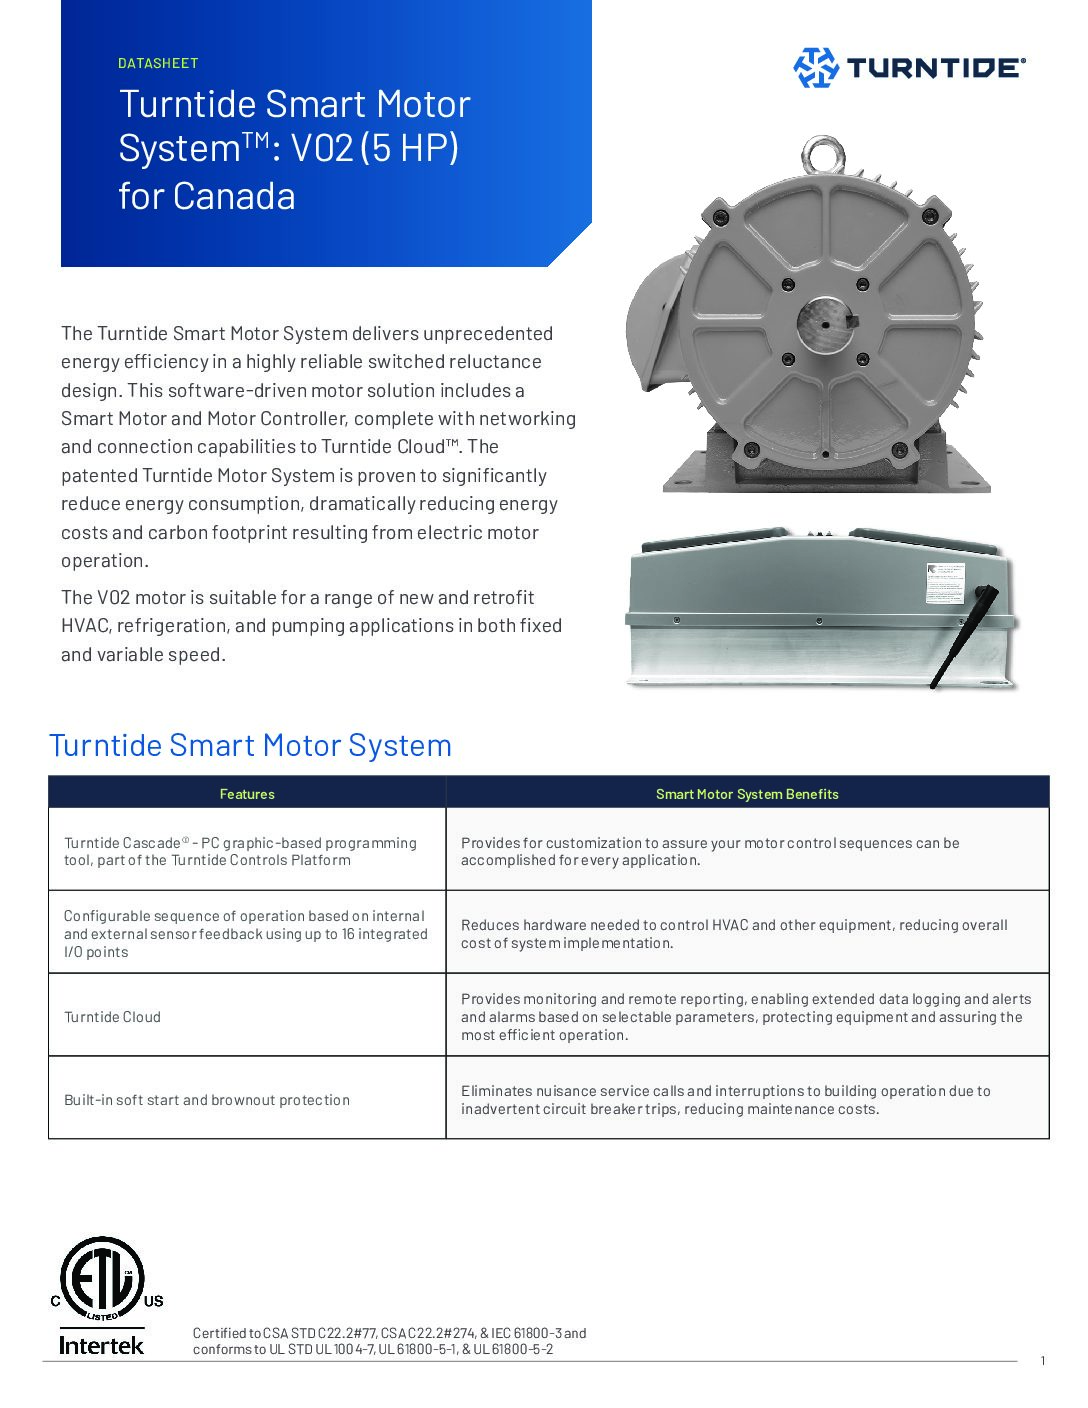 Turntide Smart Motor System: V02 (5HP) for Canada Asset Cover